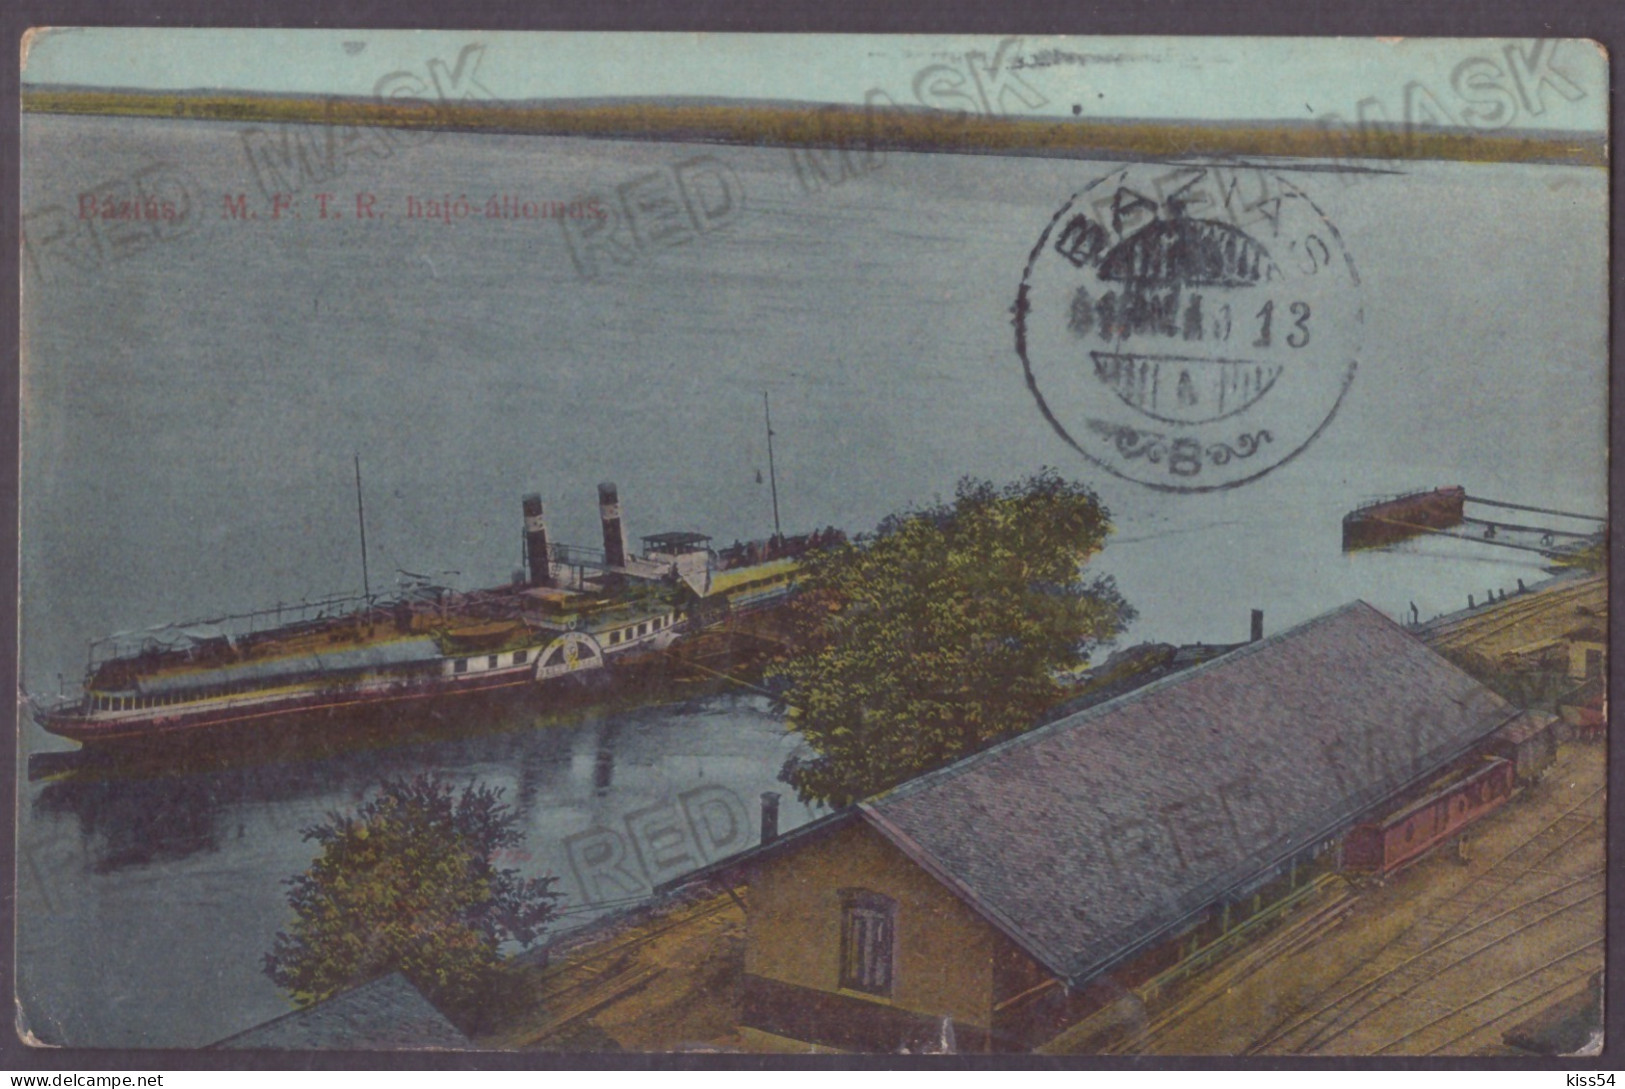 RO 40 - 23121 BAZIAS, Caras-Severin, Railway & Ship, Romania - Old Postcard - Used - 1913 - Roumanie